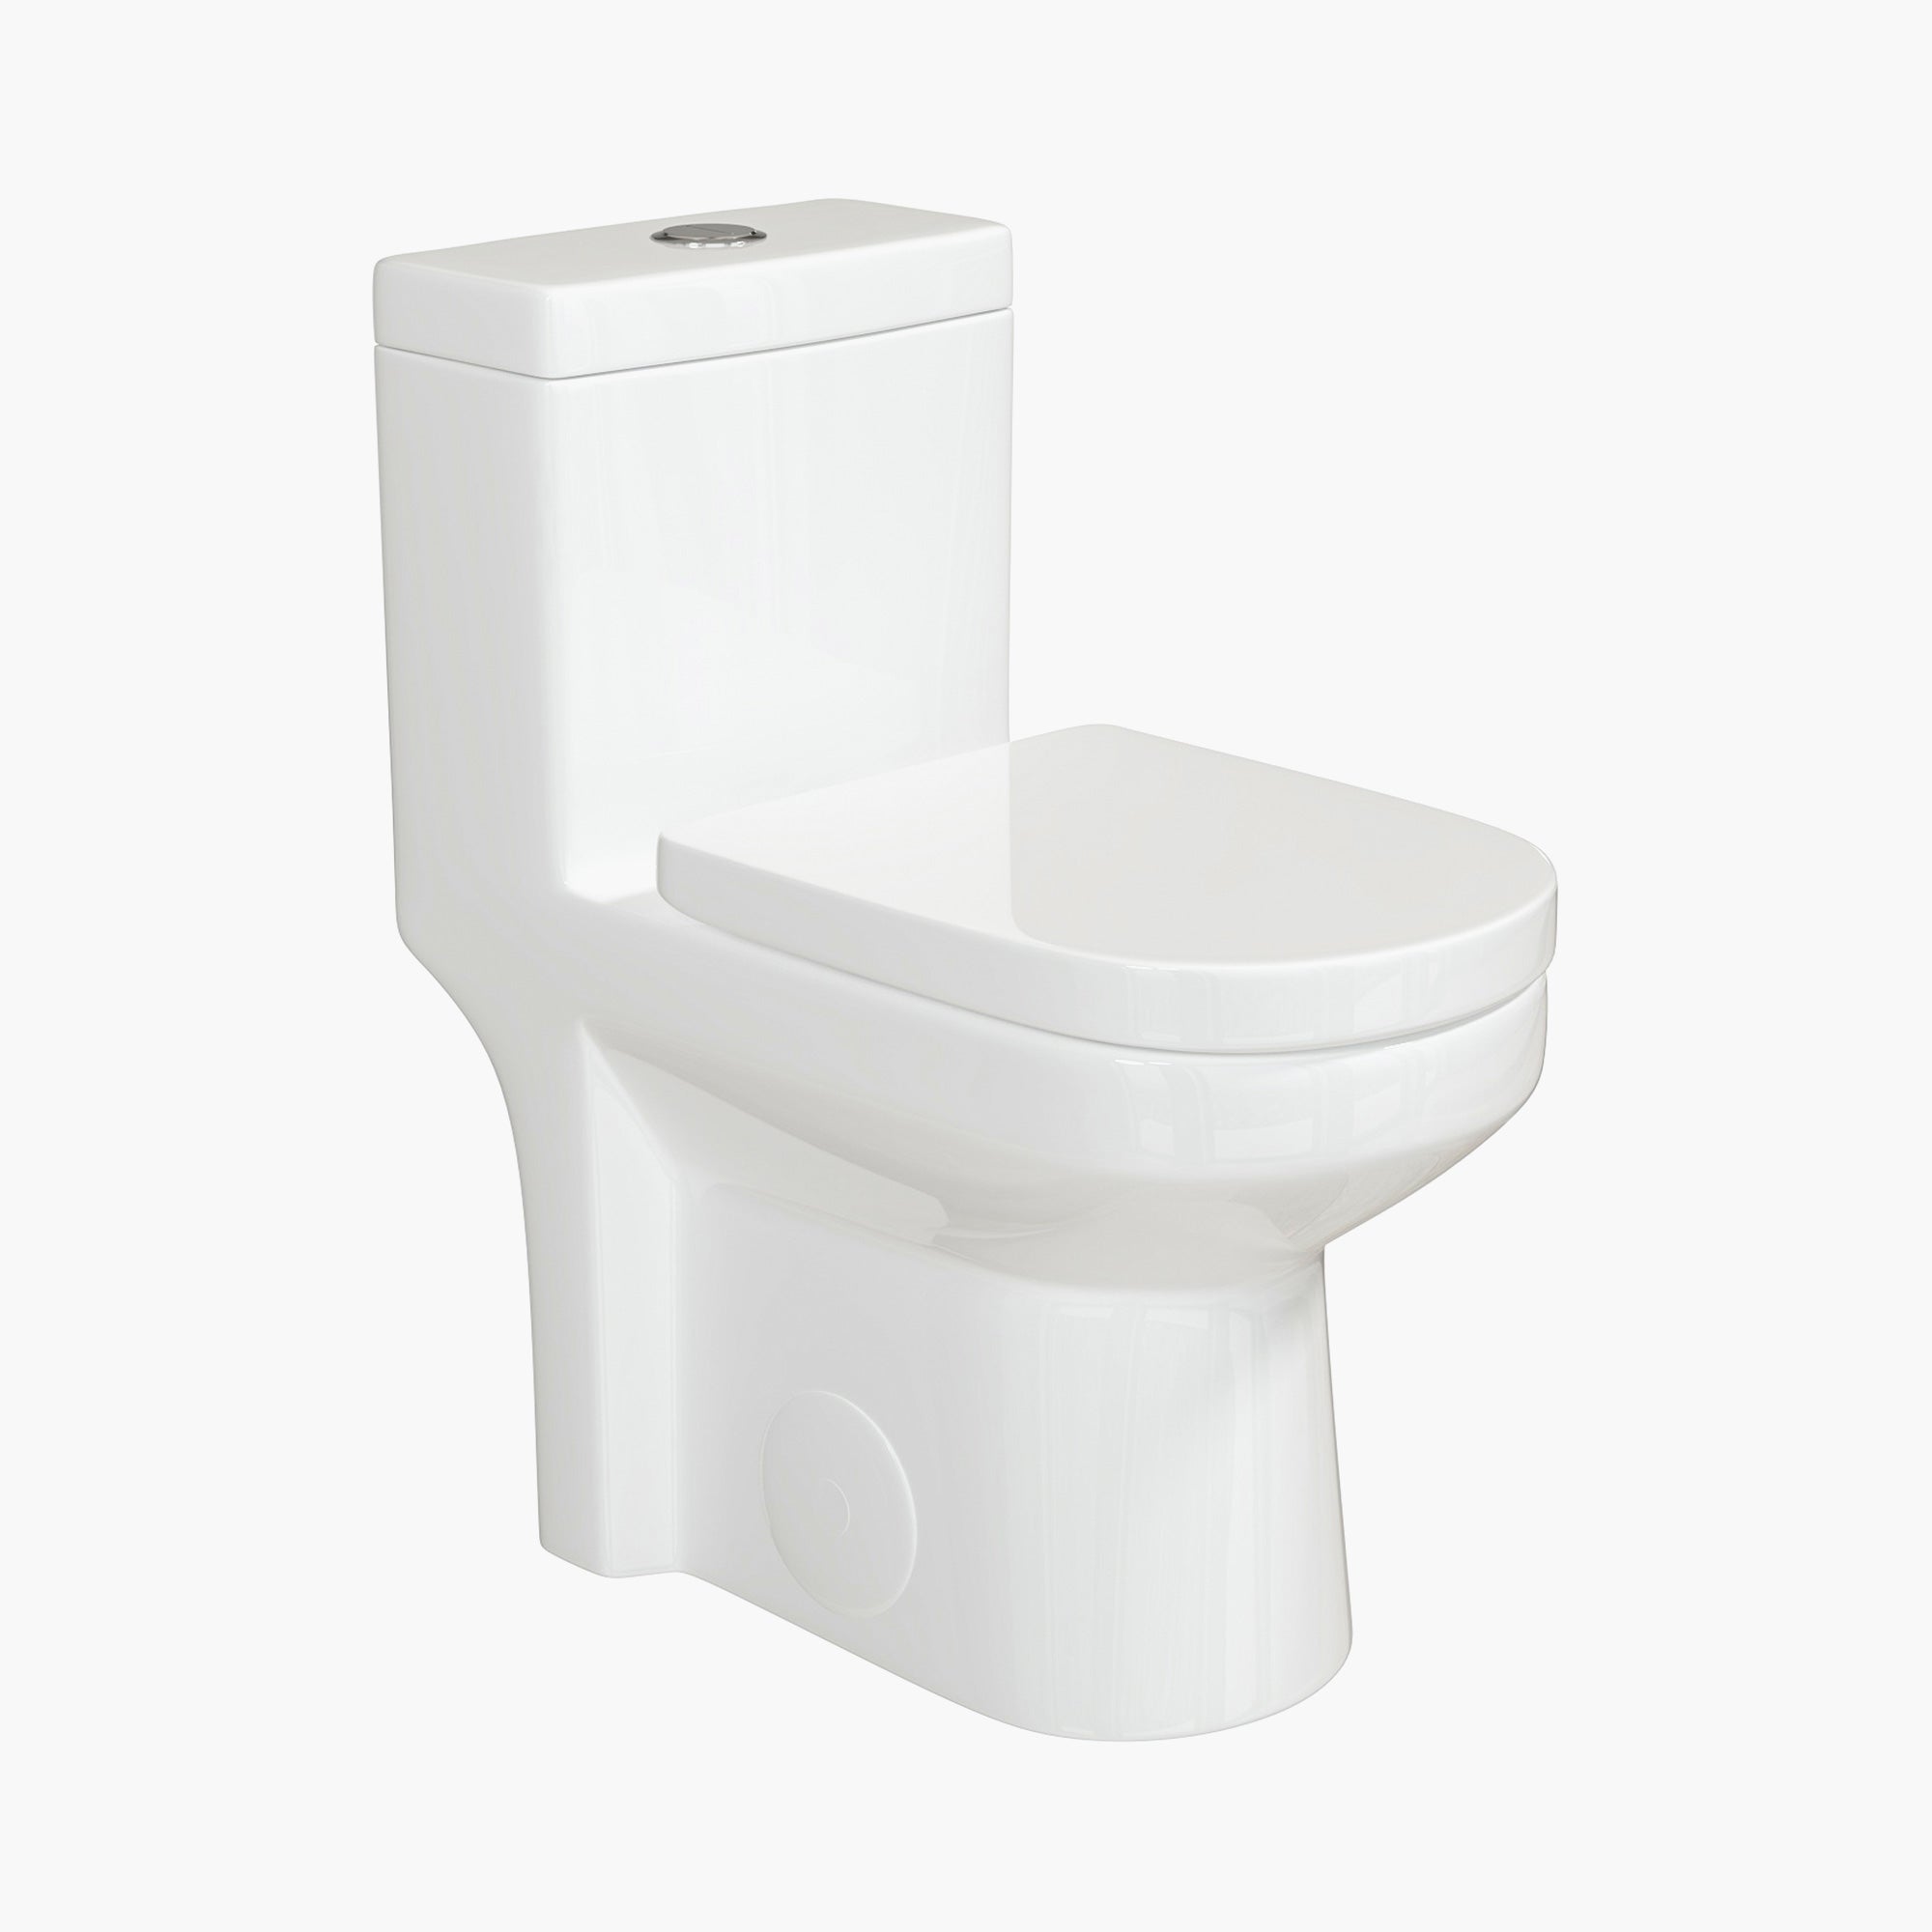 HOROW Compact Toilet For Small Bathroom Dual Flush Toilet Model 8733U